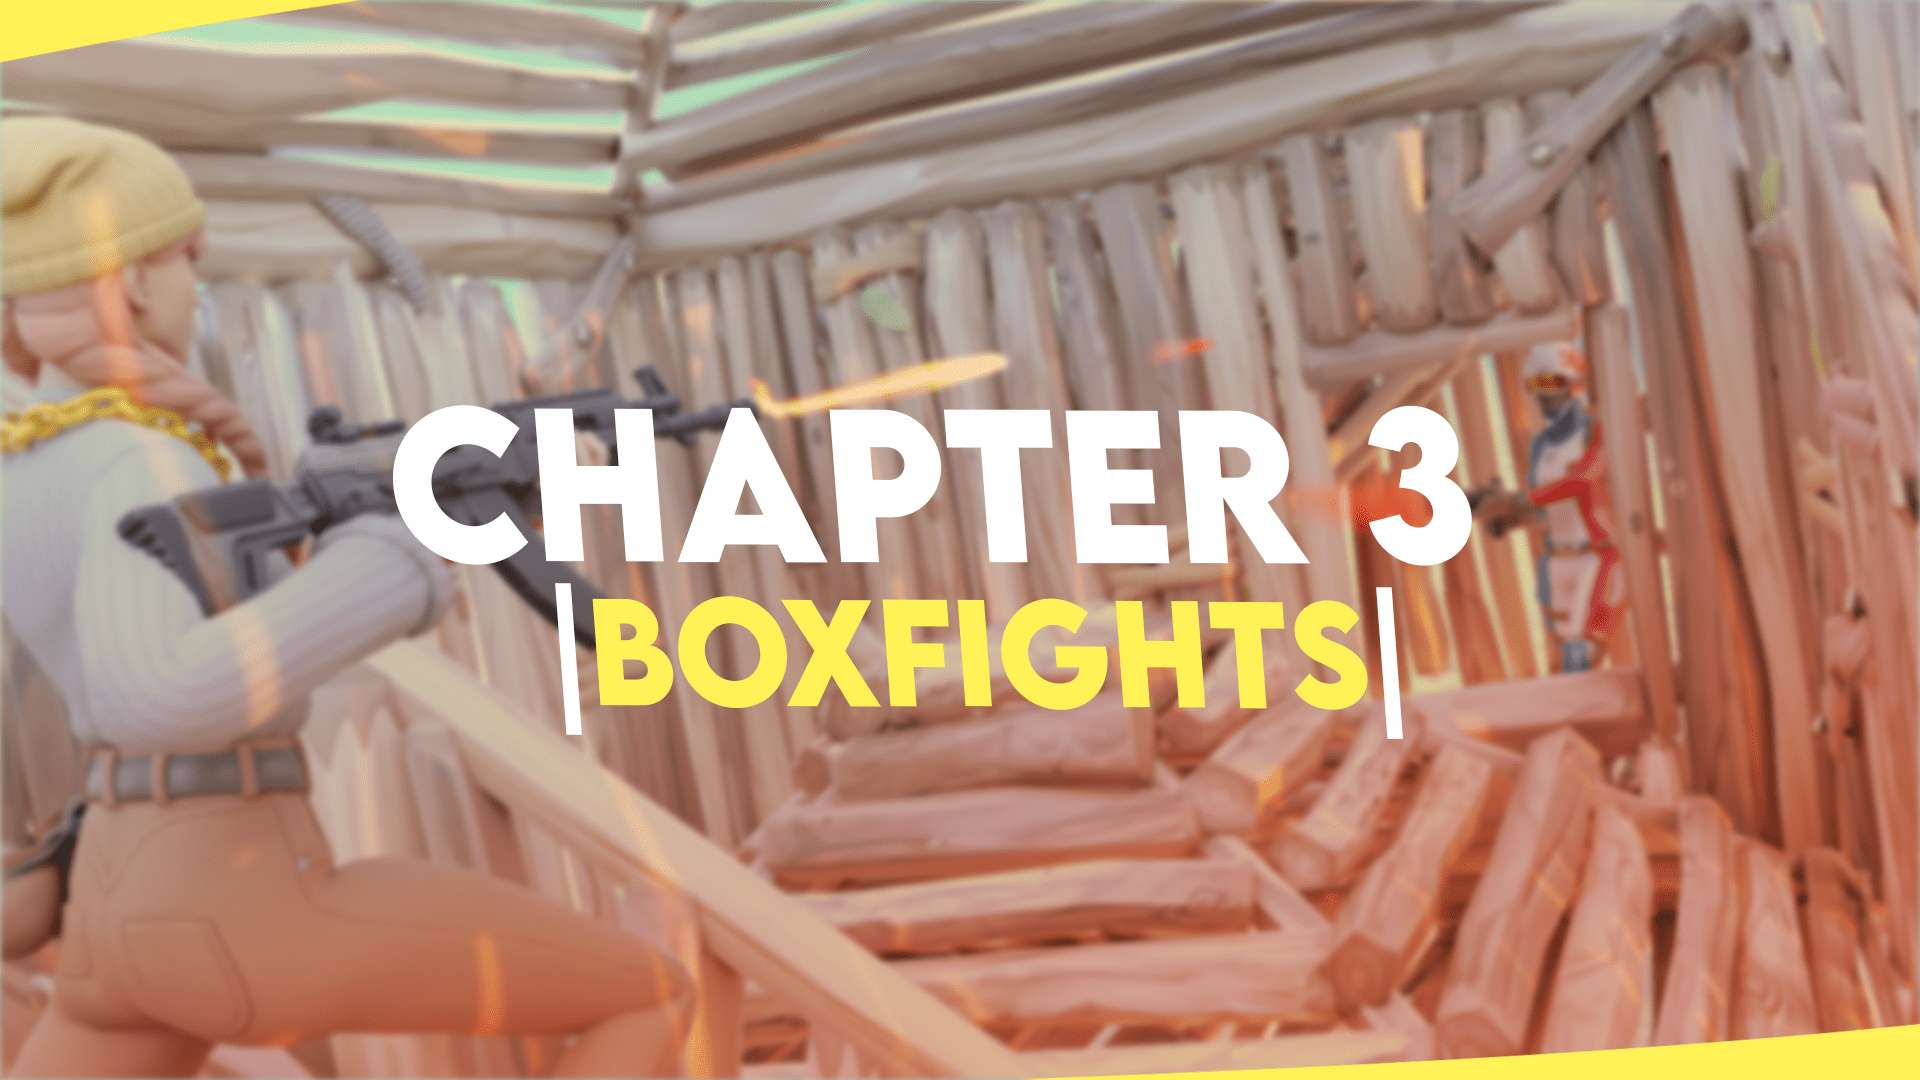 CHAPTER 3 |16 PLAYER| BOXFIGHTS image 2